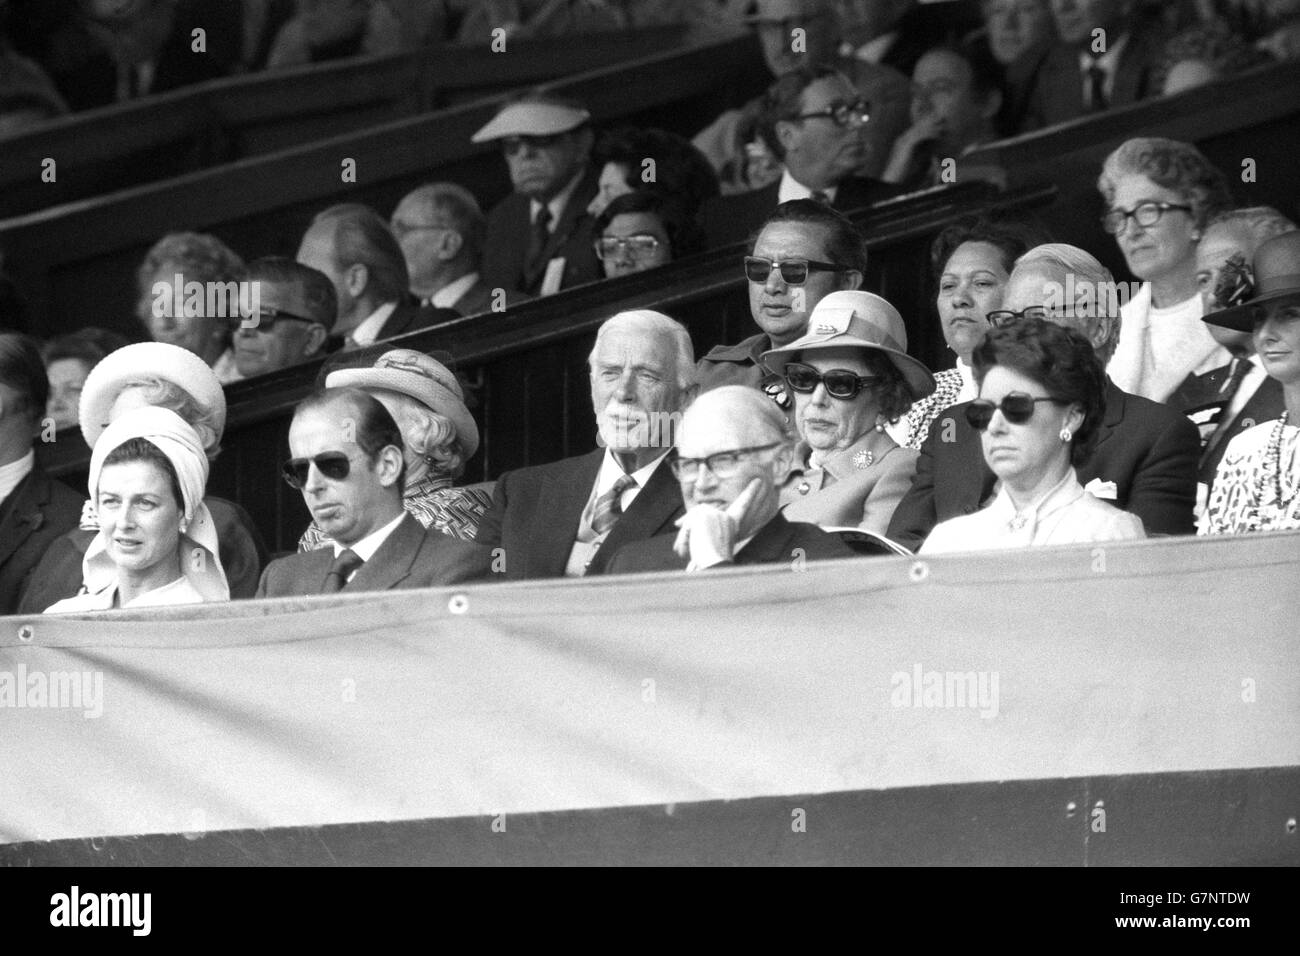 Princess Alexandra of Kent, Prince Edward, Duke of Kent (dark glasses) and Princess Margaret (far right in dark glasses) attend the Wimbledon Men's Single final. Stock Photo